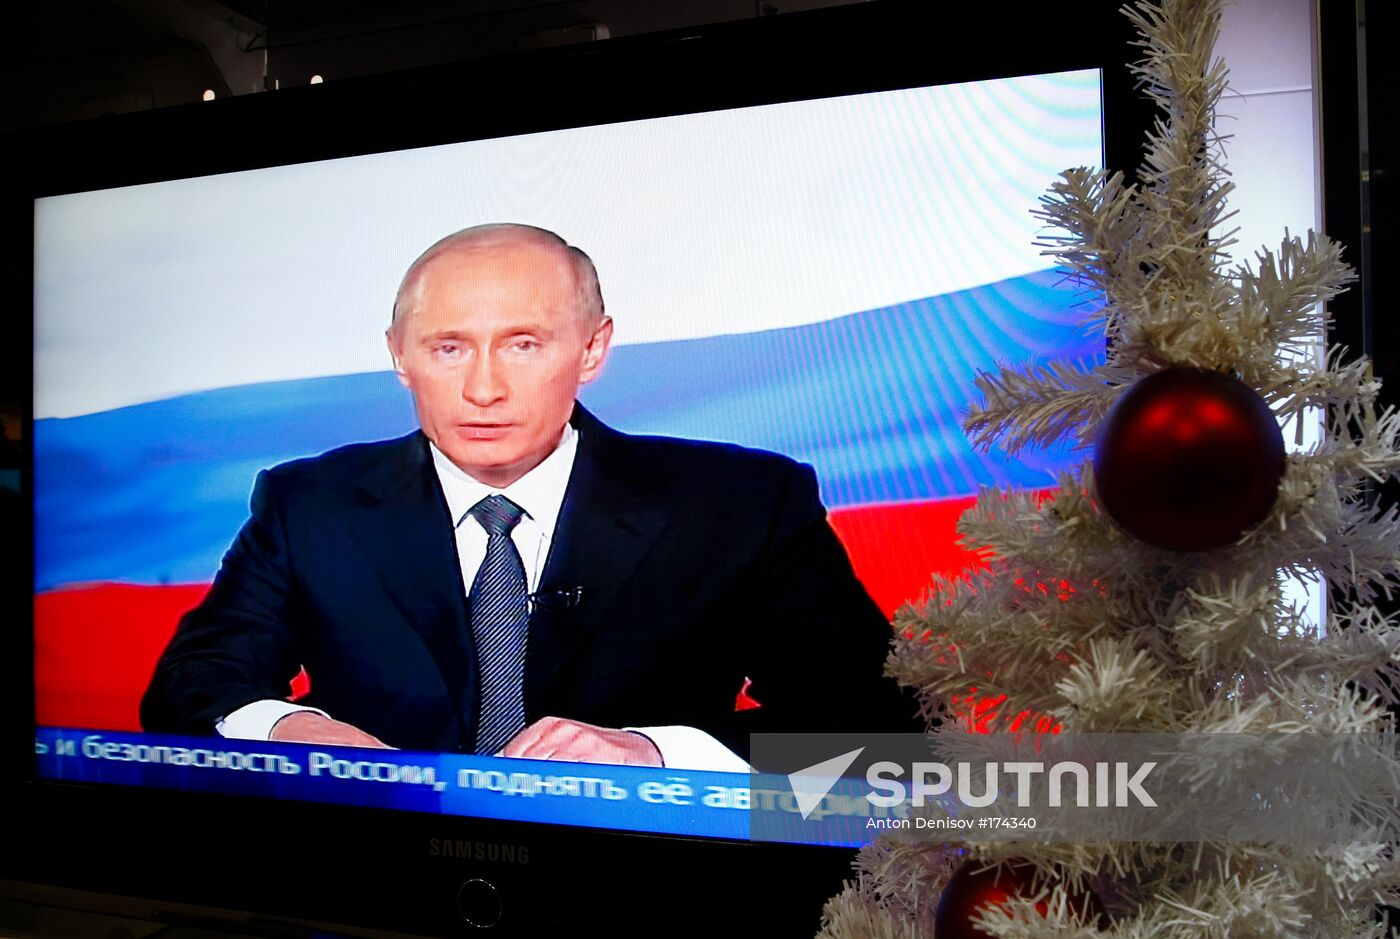 Putin's television address